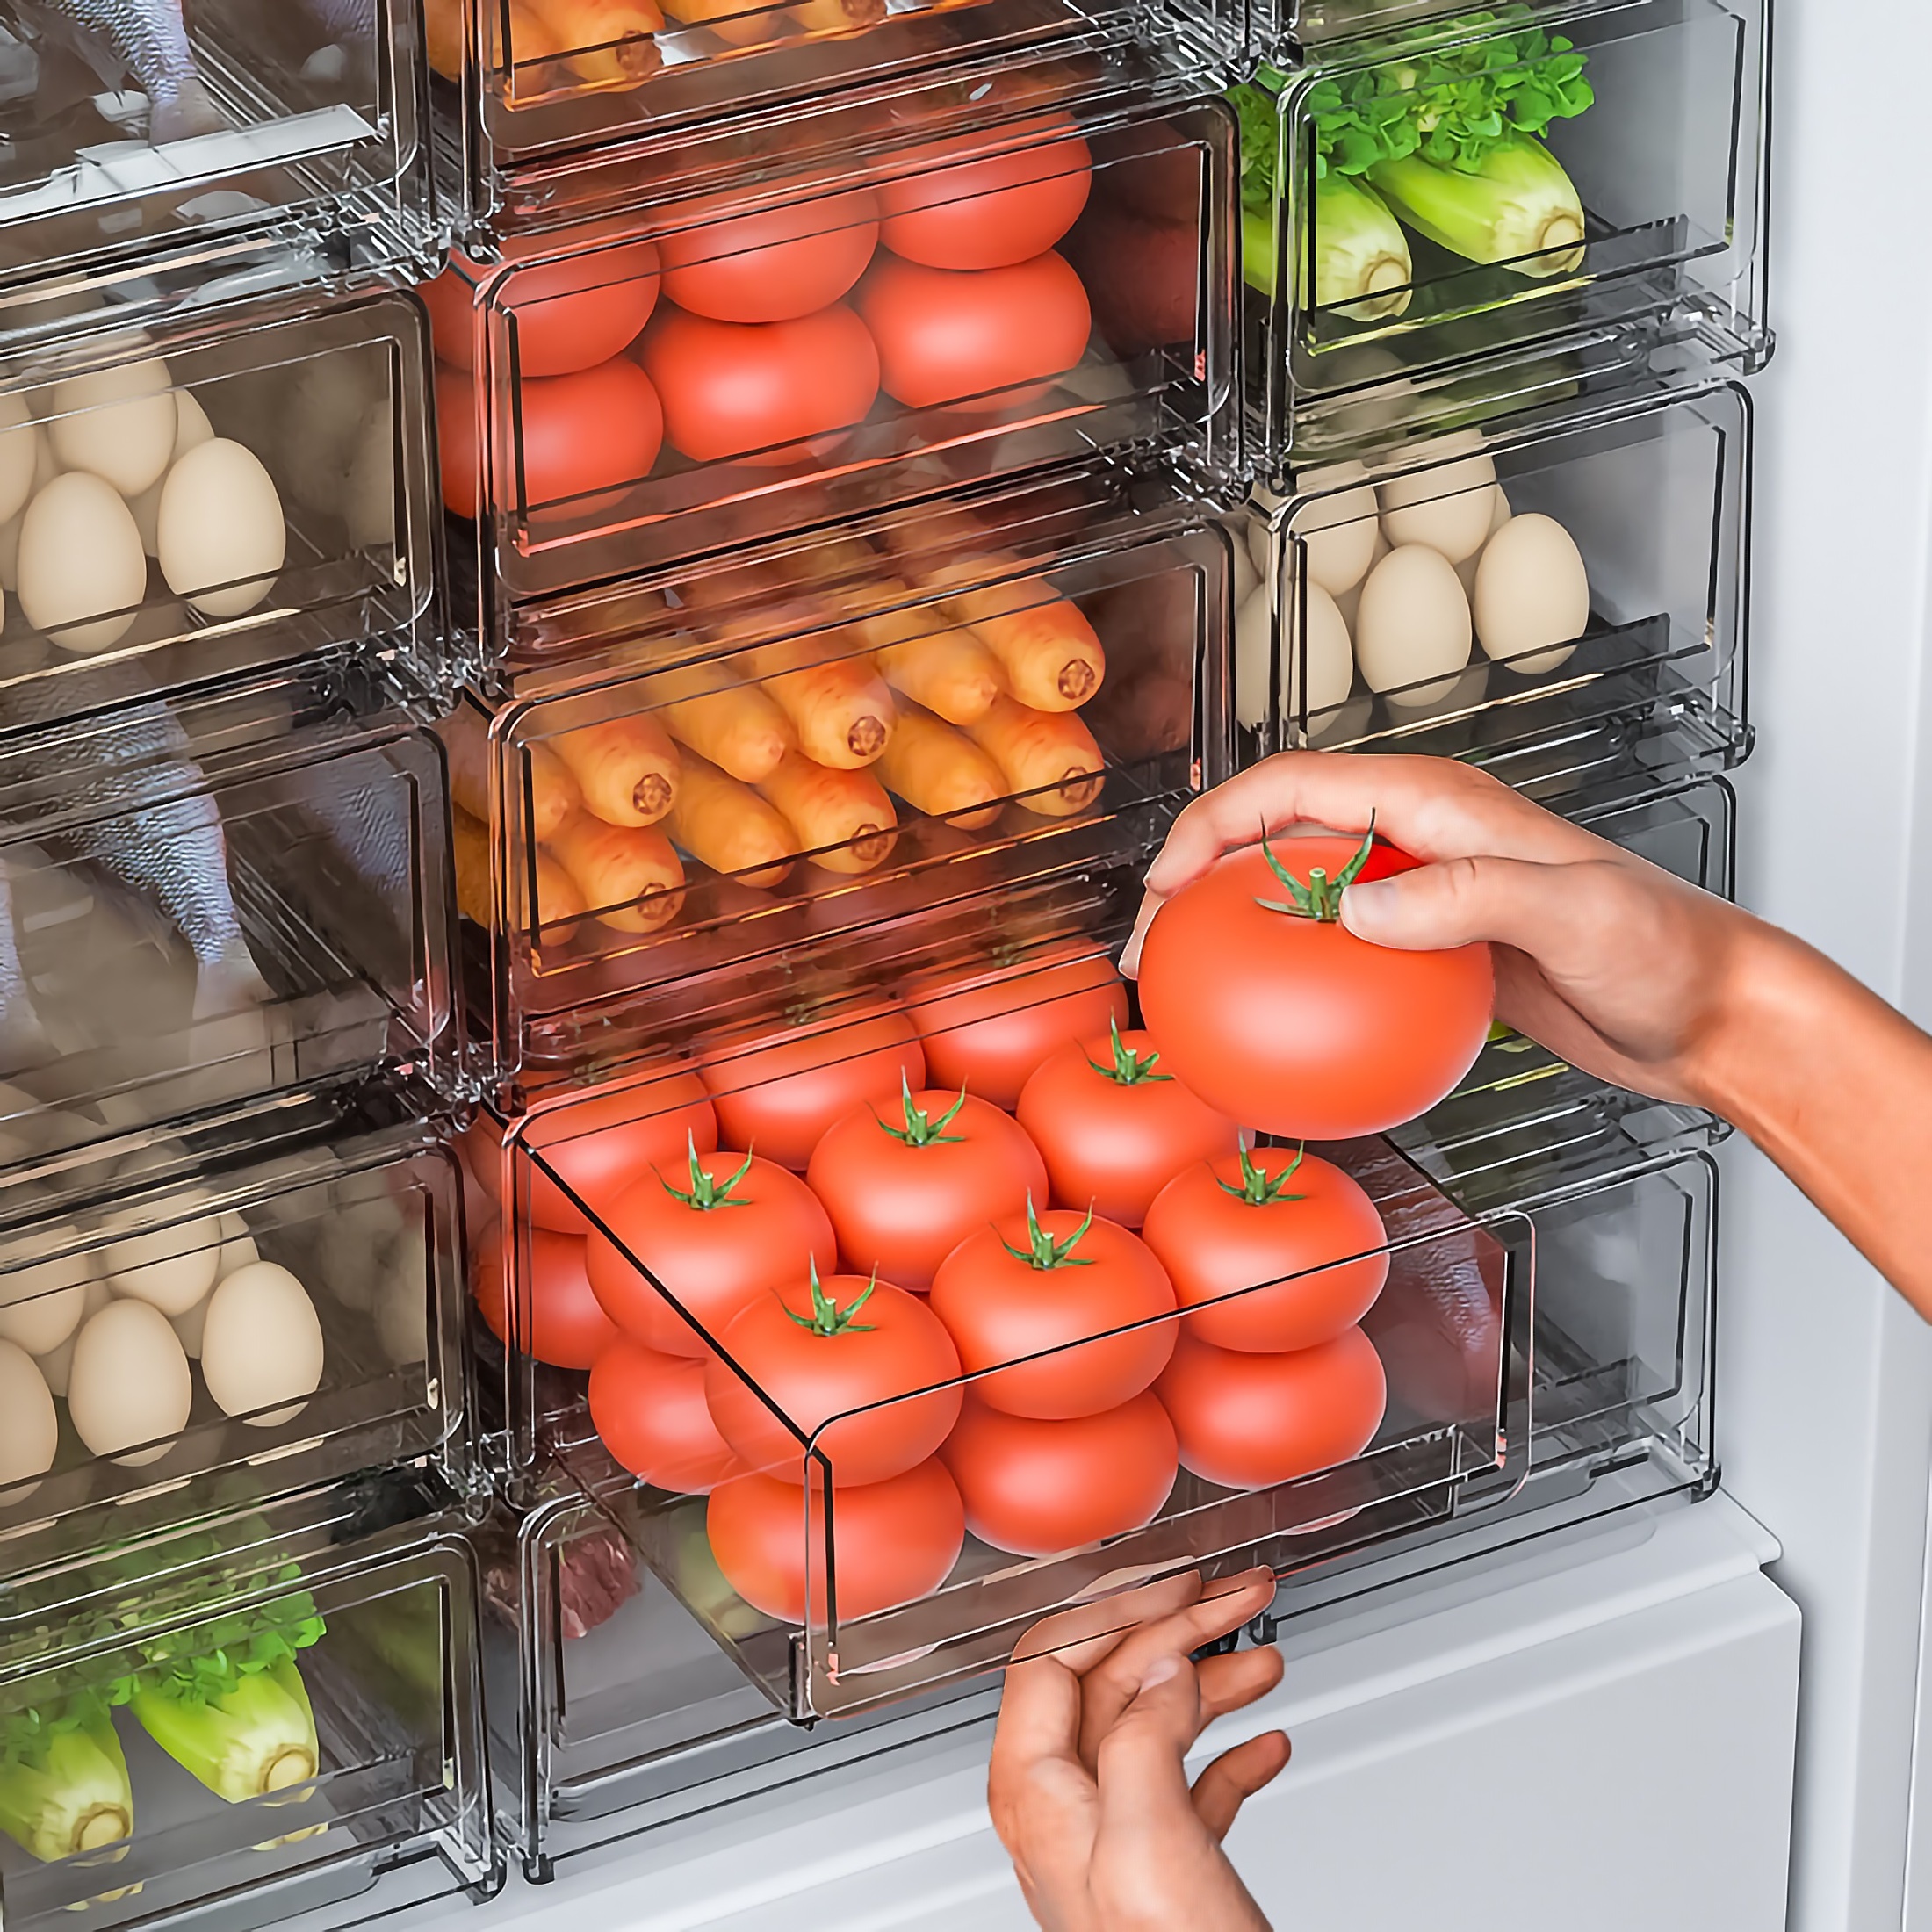 FZM Organization And Storage 4L Drink Dispenser Refrigerator